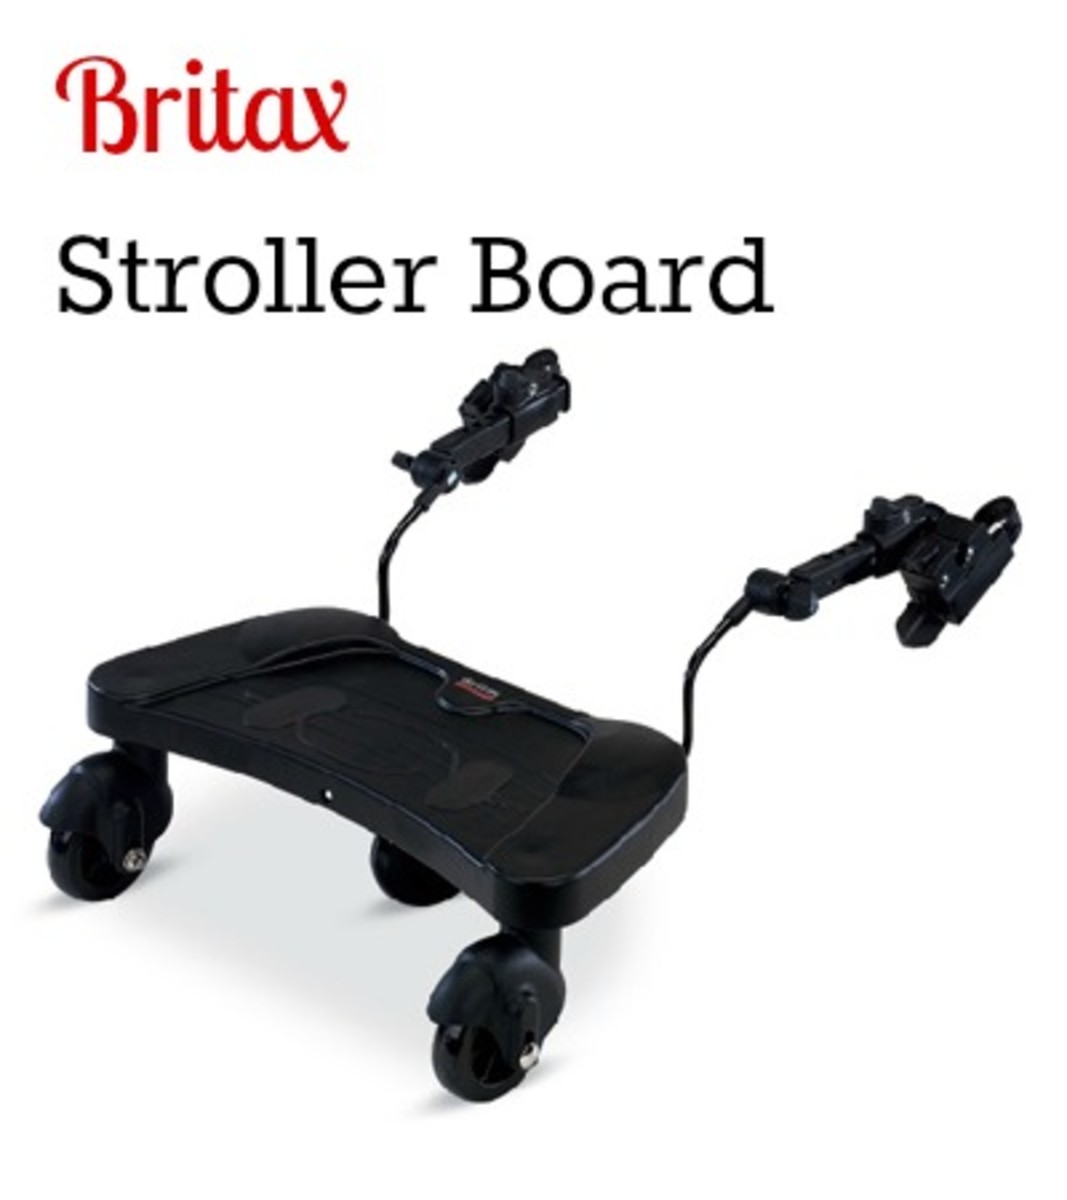 britax stroller wheels